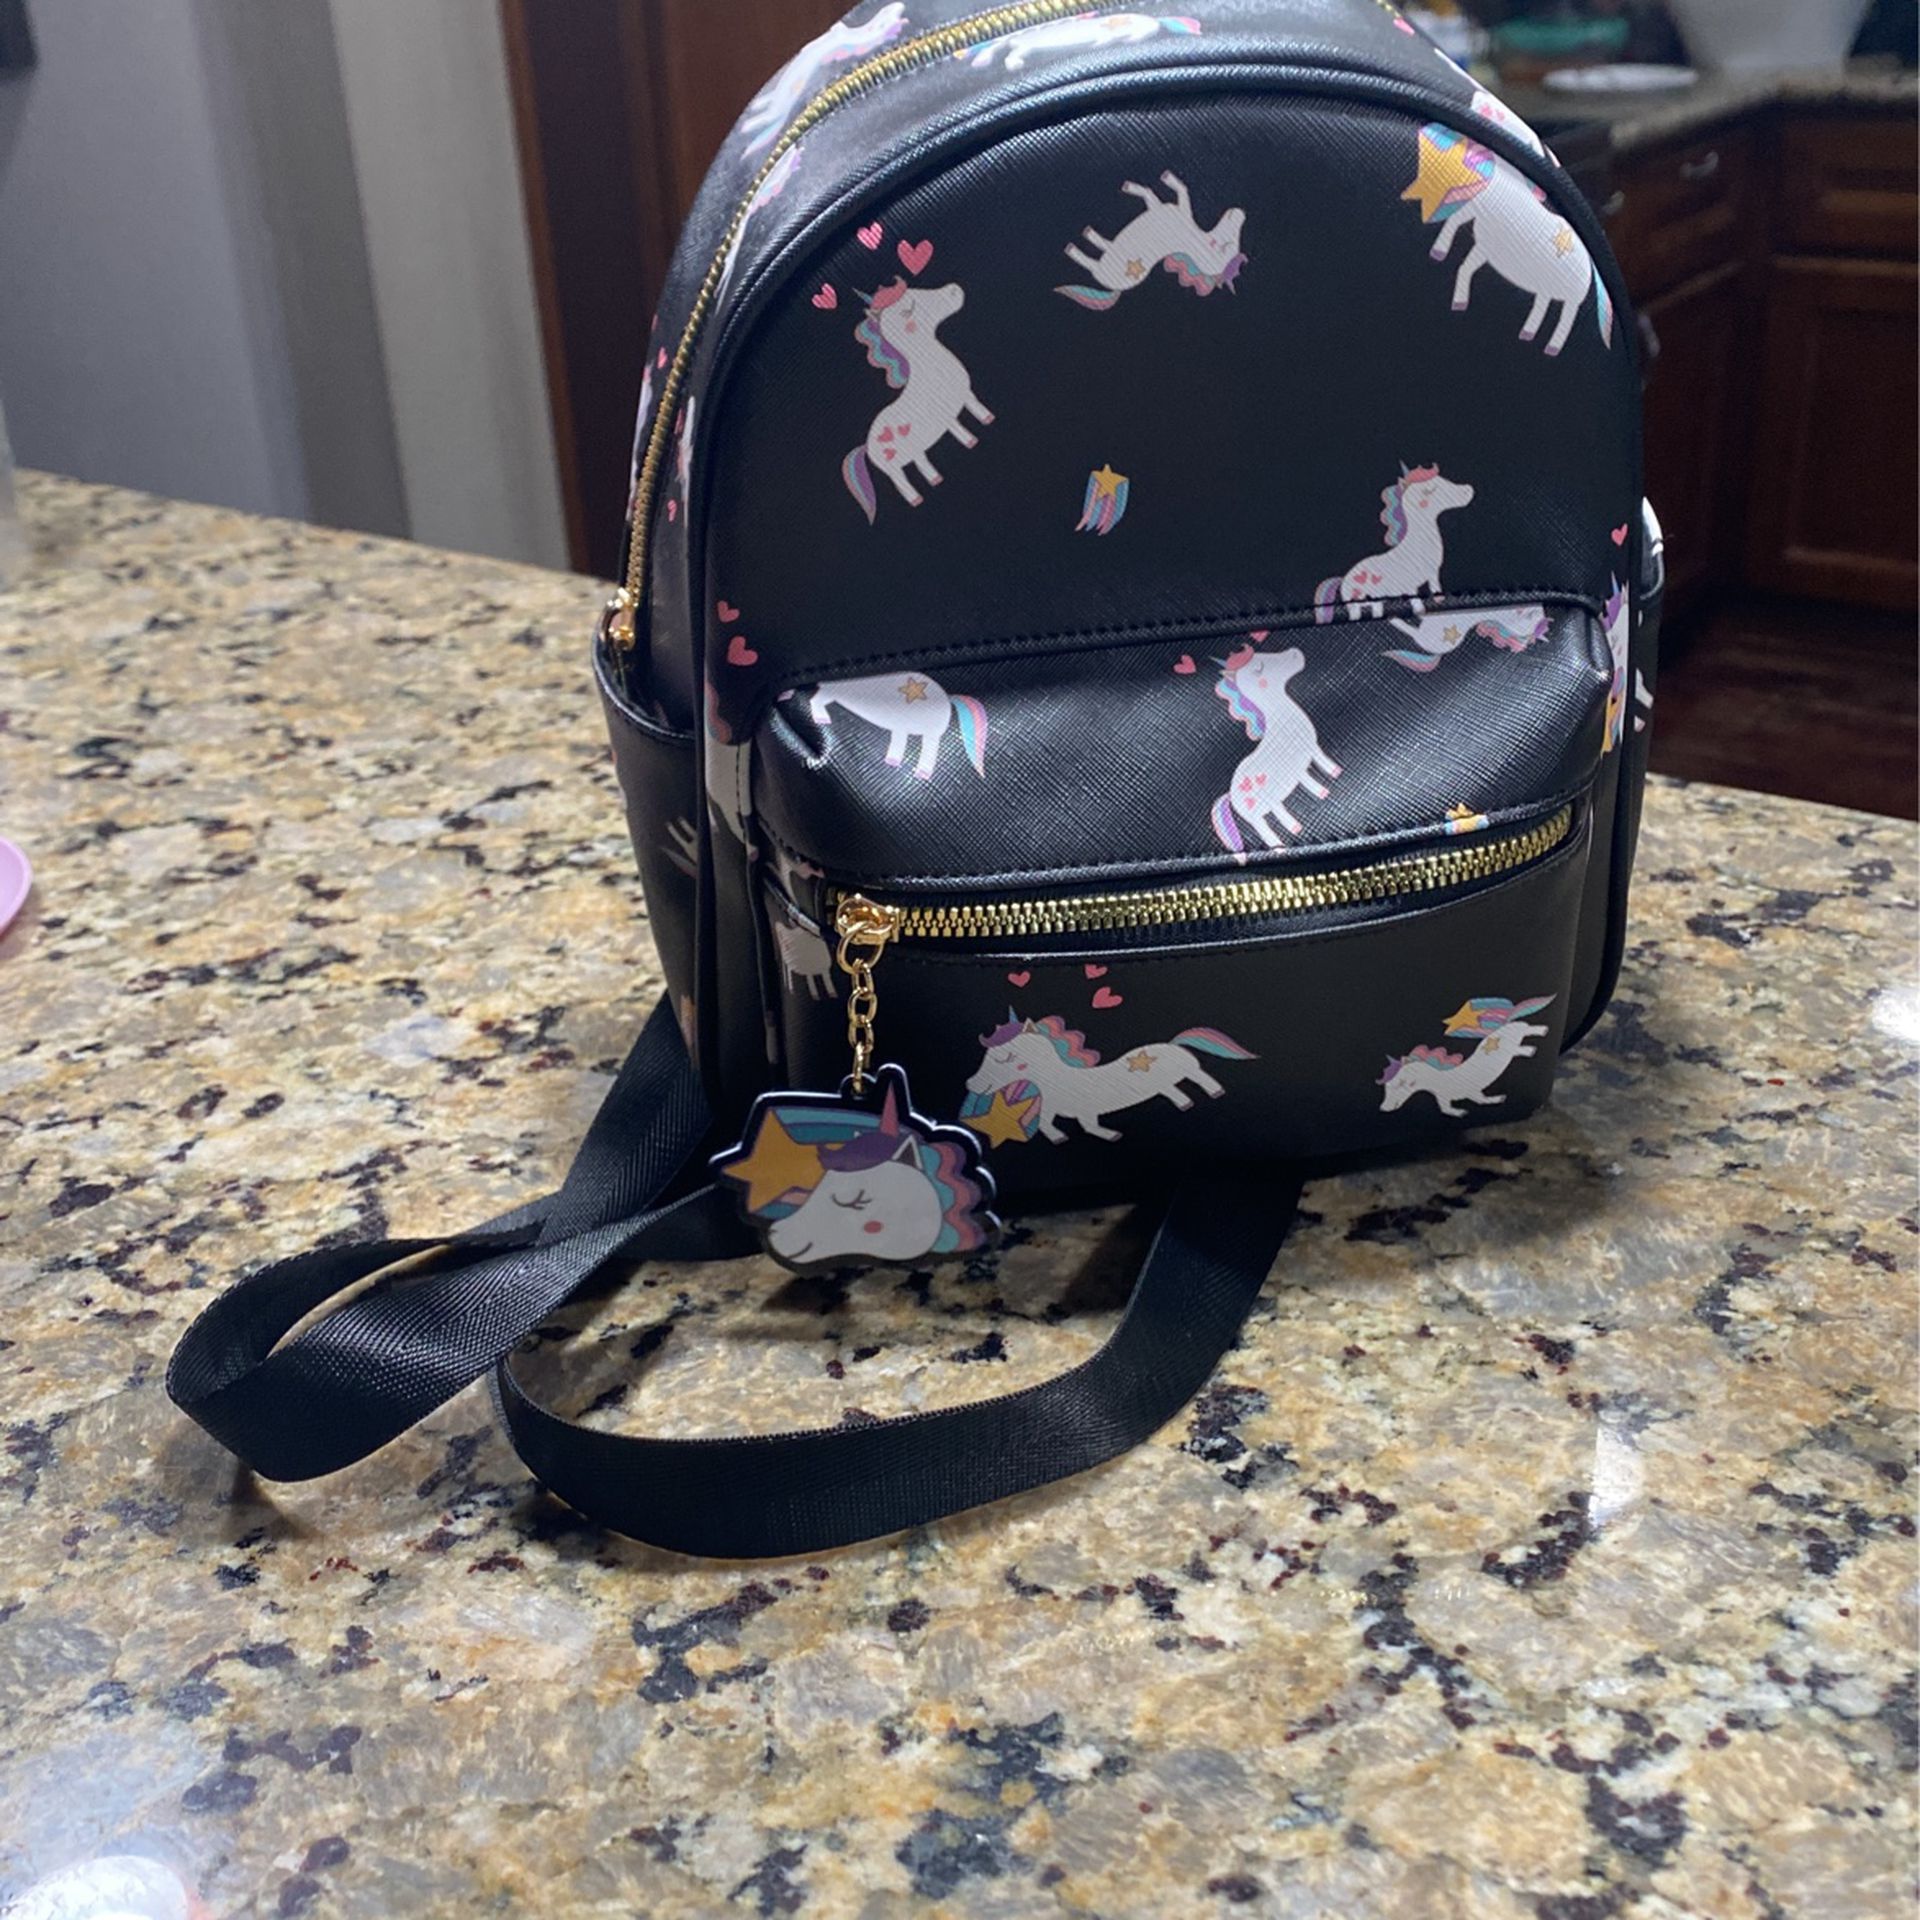 New unicorn backpack